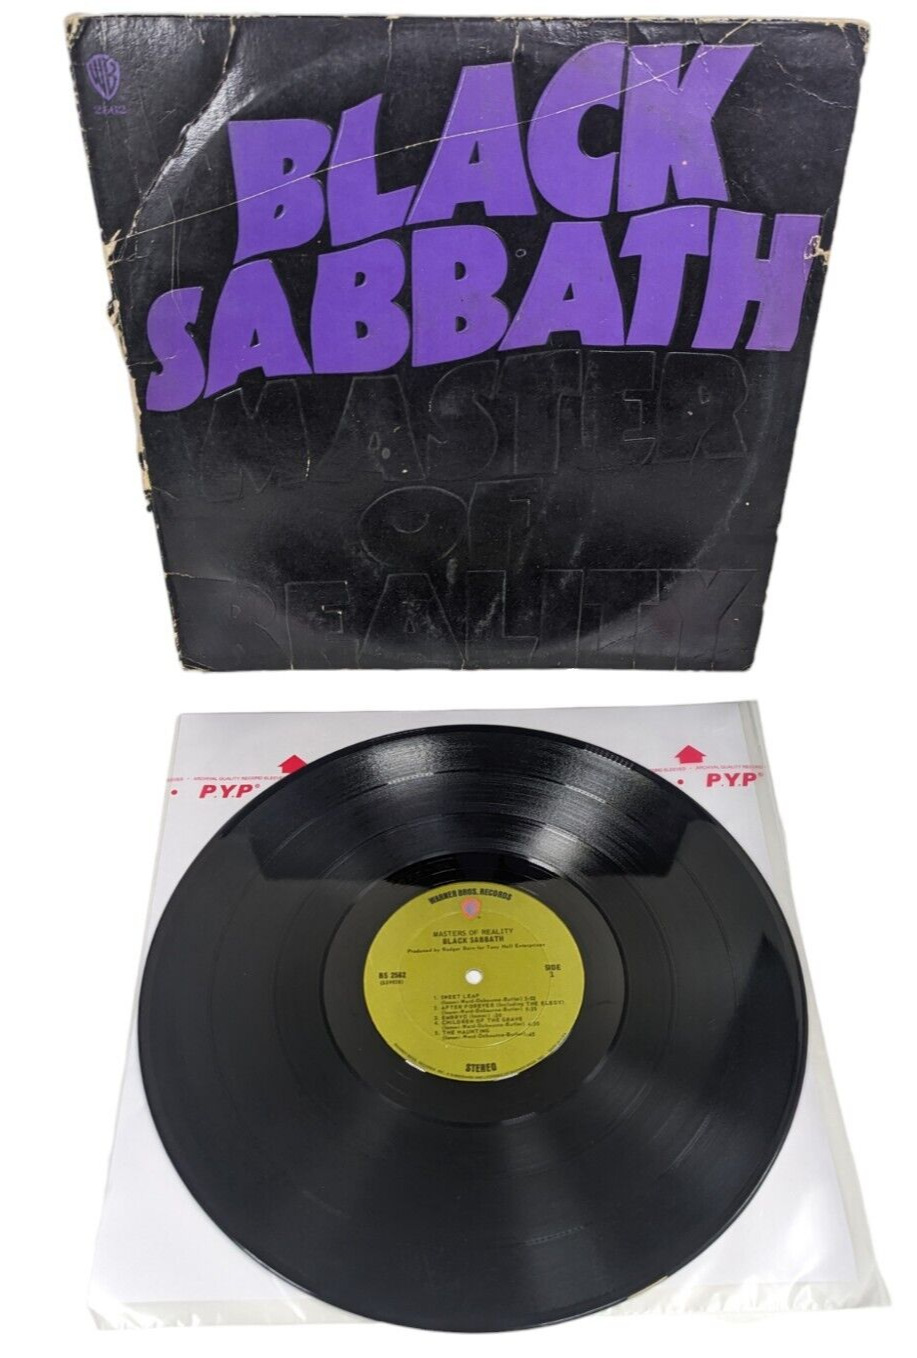 Black Sabbath Master of Reality Vinyl LP Record Album BS 2562 1971 Warner Bros